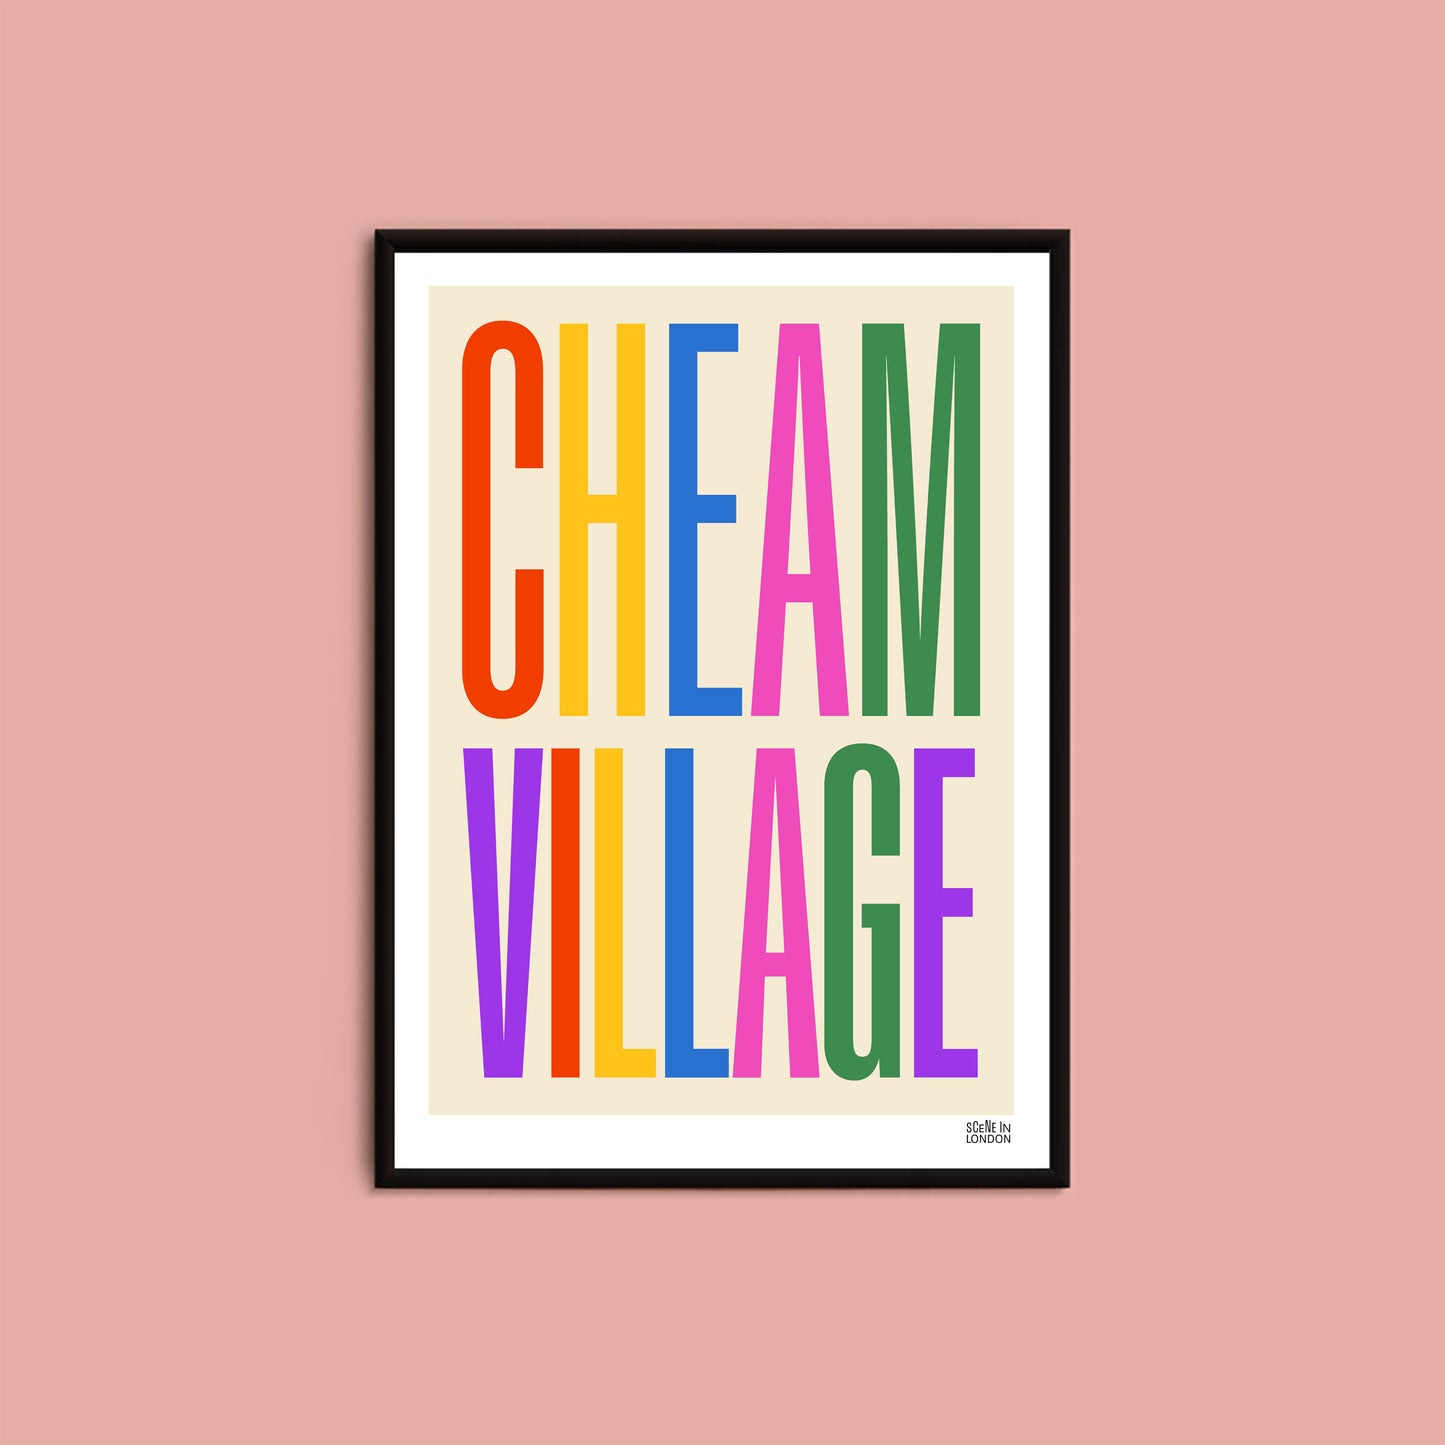 Cheam Village Poster Print